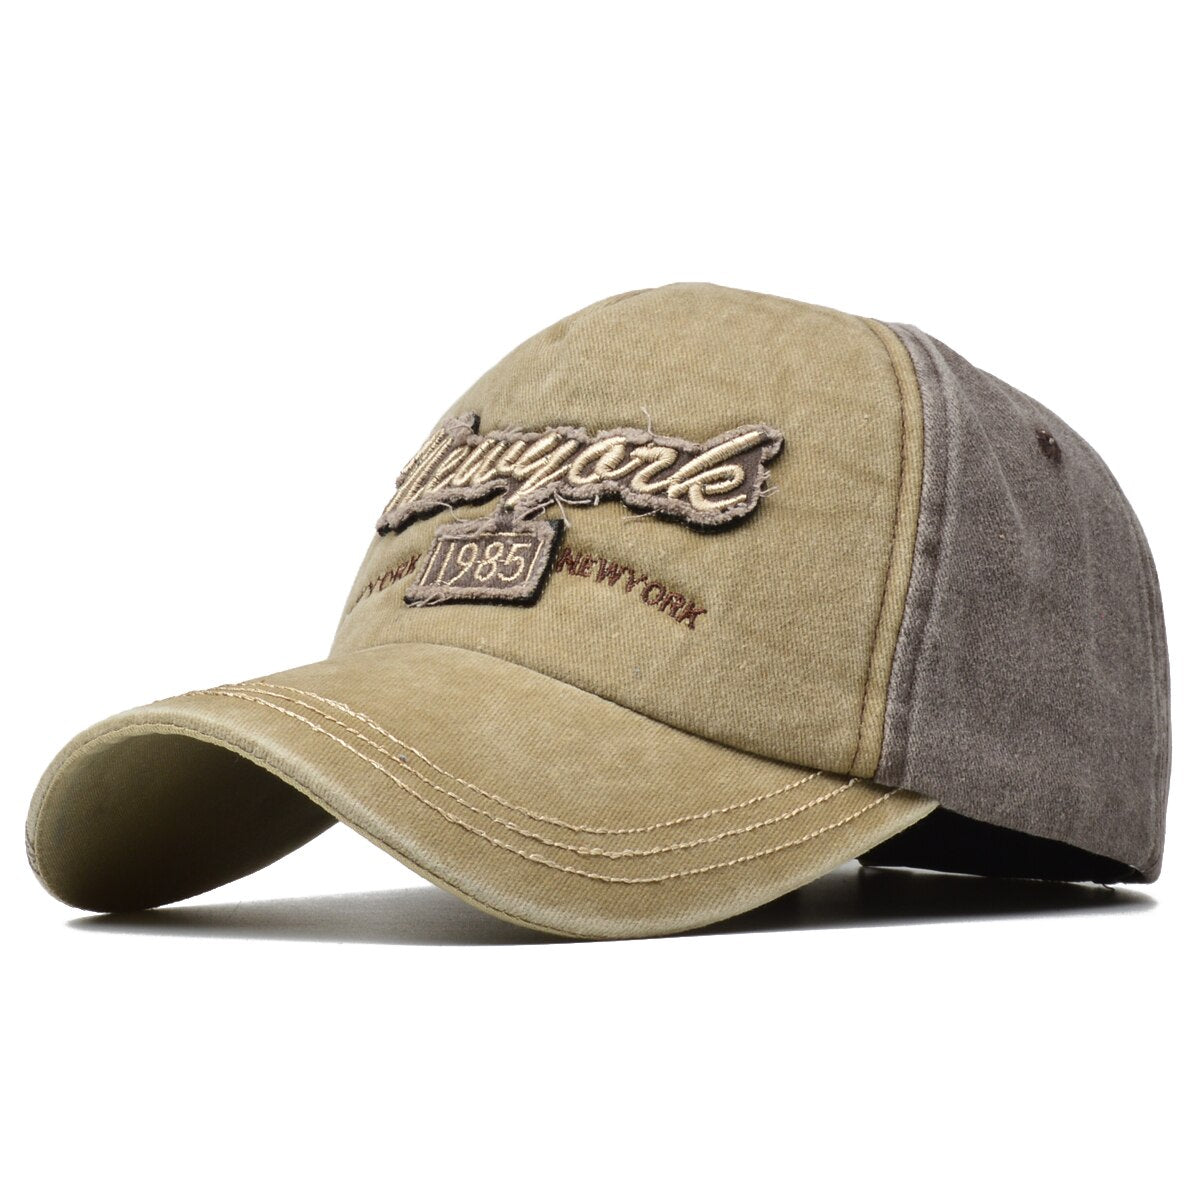 All Cotton Men's Baseball Cap Fashion Women's Dad Hat Embroidery Pattern Adjustable Snapback Outdoor Bone Trucker Hats